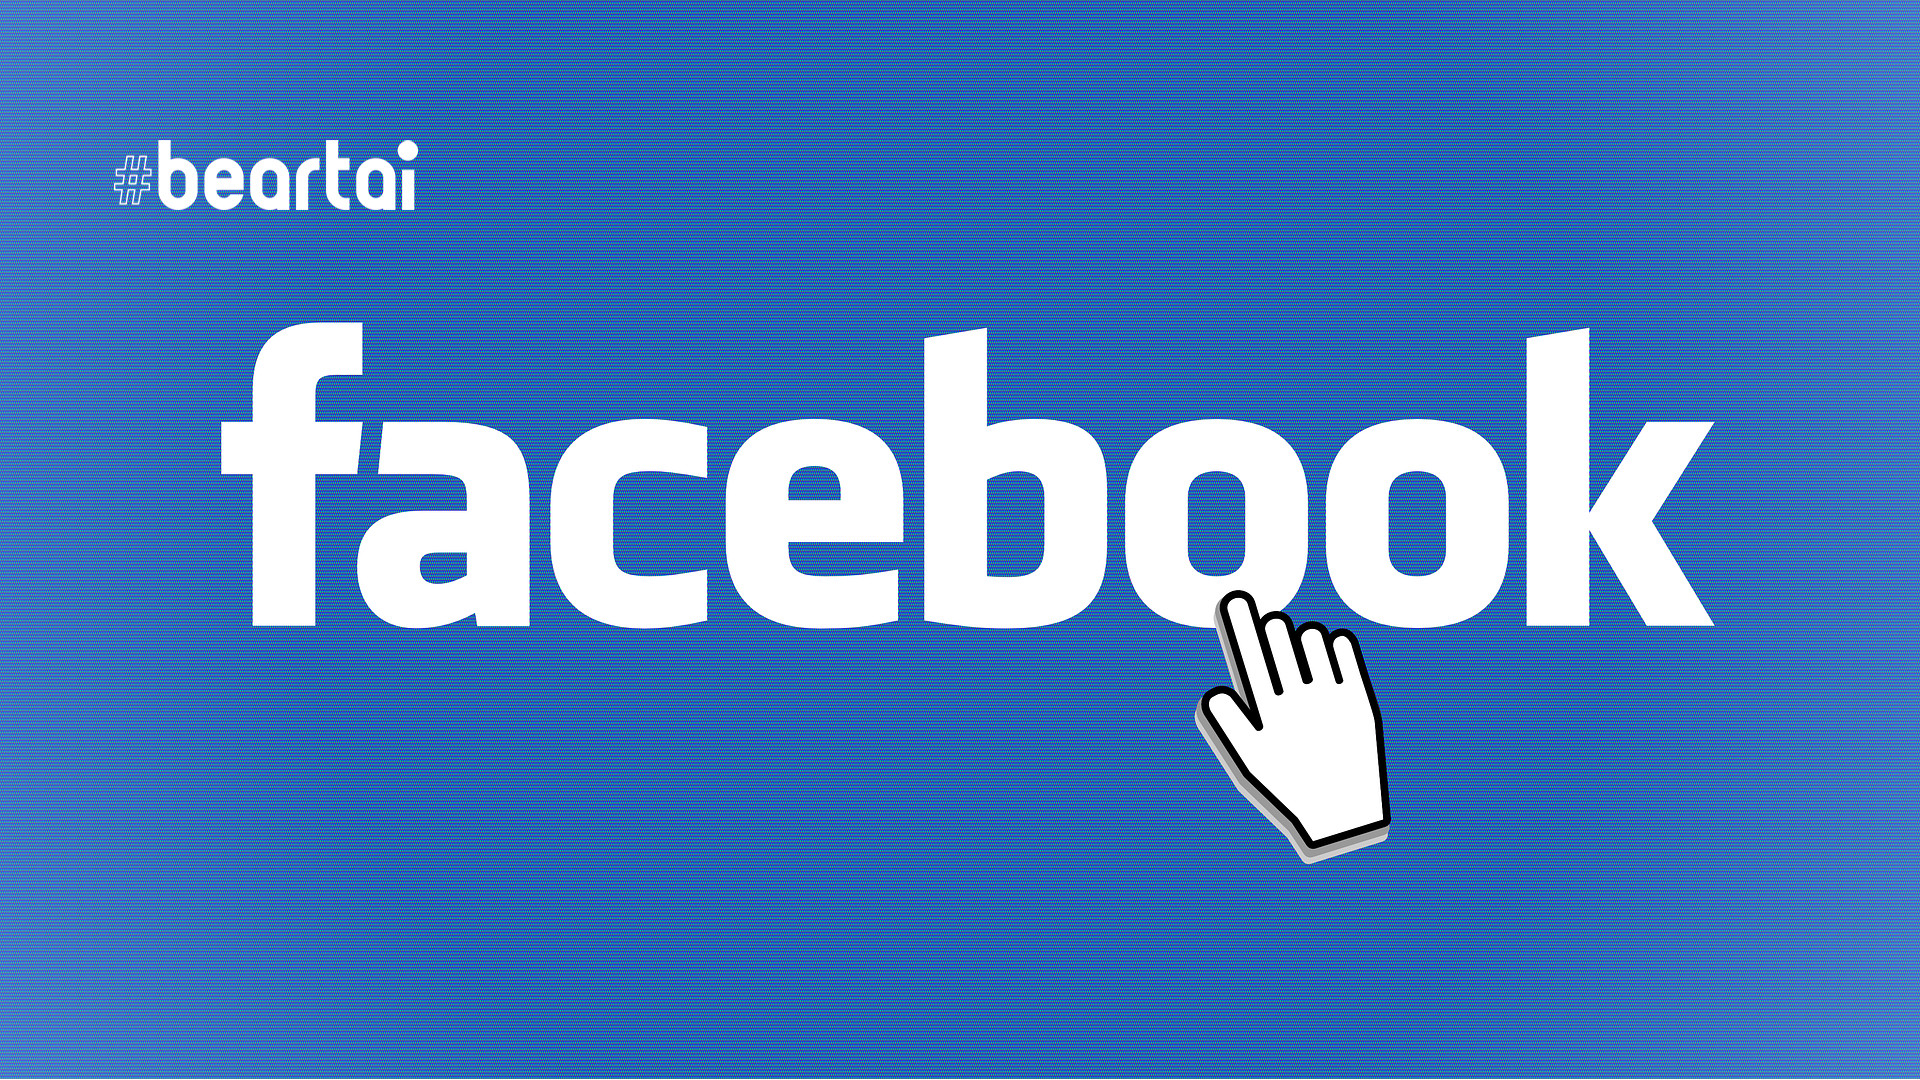 Facebook สุดทนฟ้องเจ้าของเว็บดูดข้อมูลผู้ใช้ Instagram กว่า 100,000 ราย